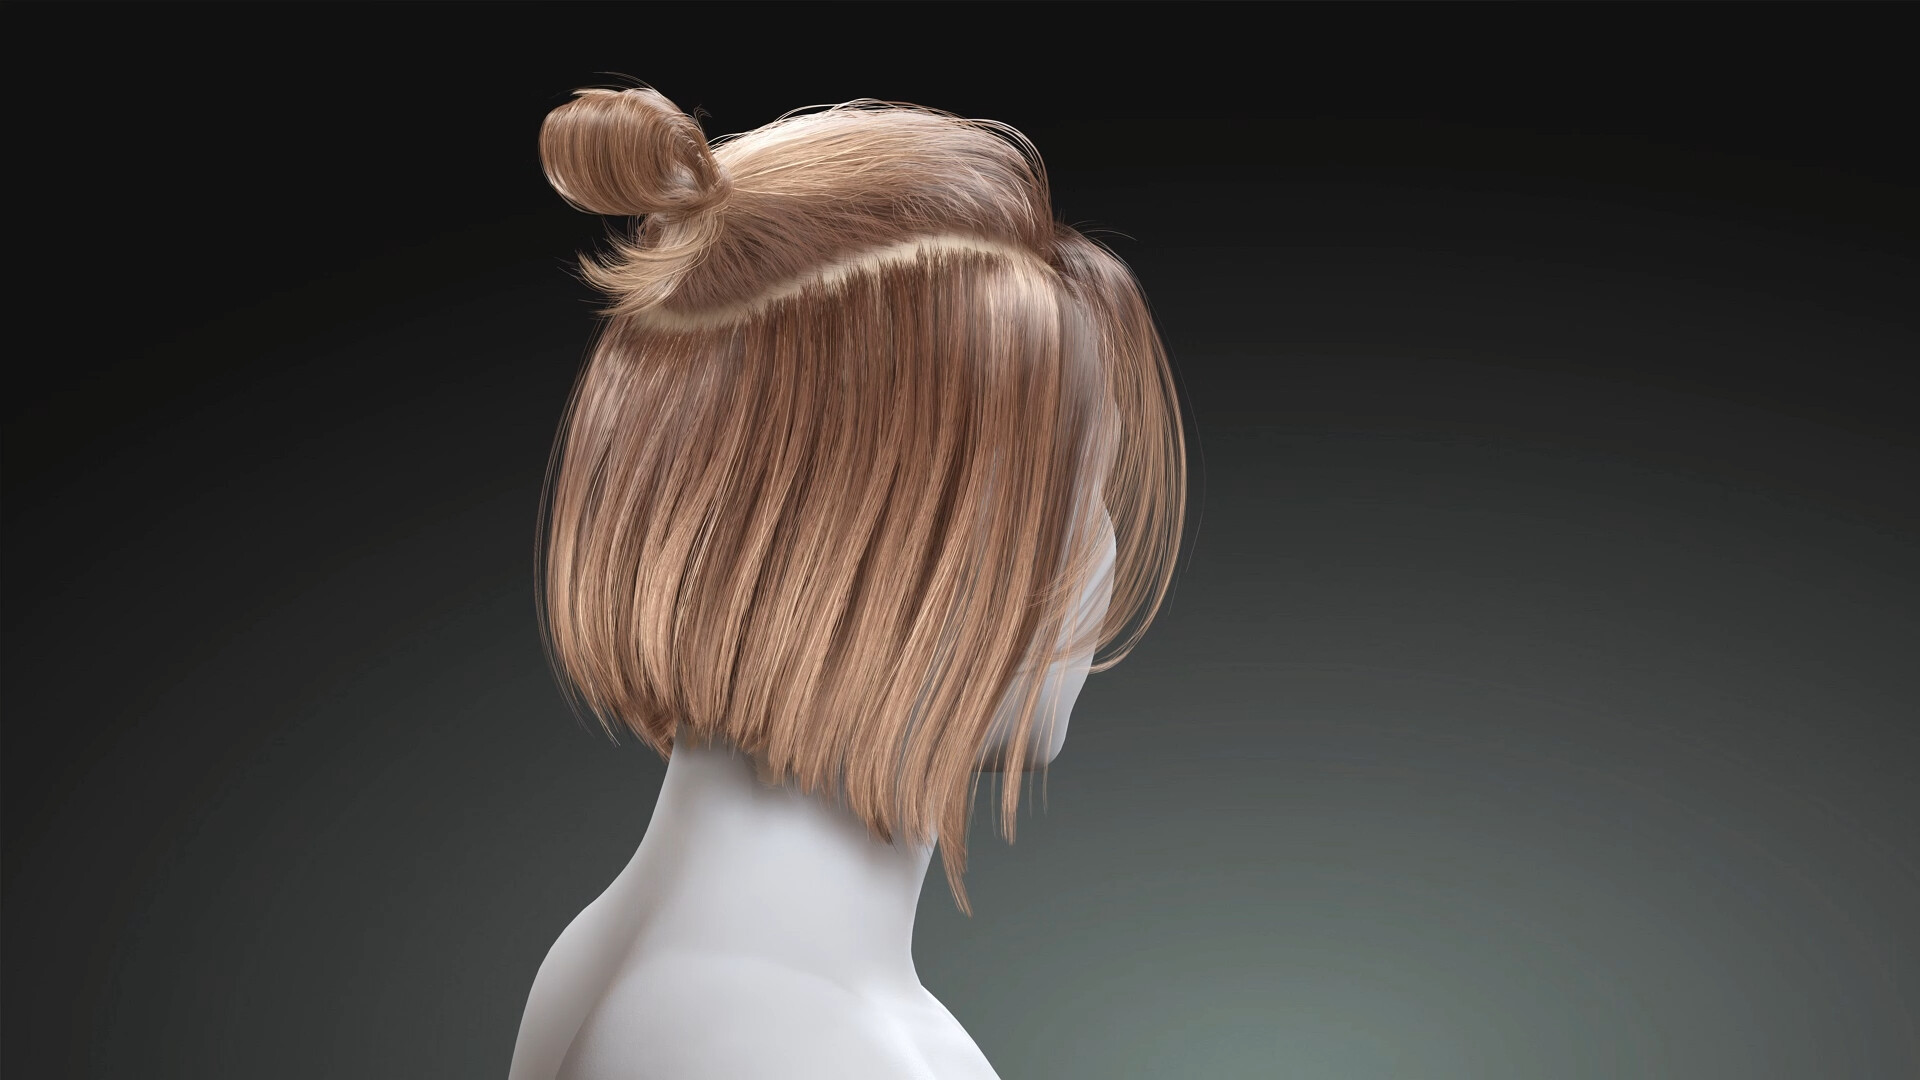 ArtStation - Realistic Short Hairstyle Female